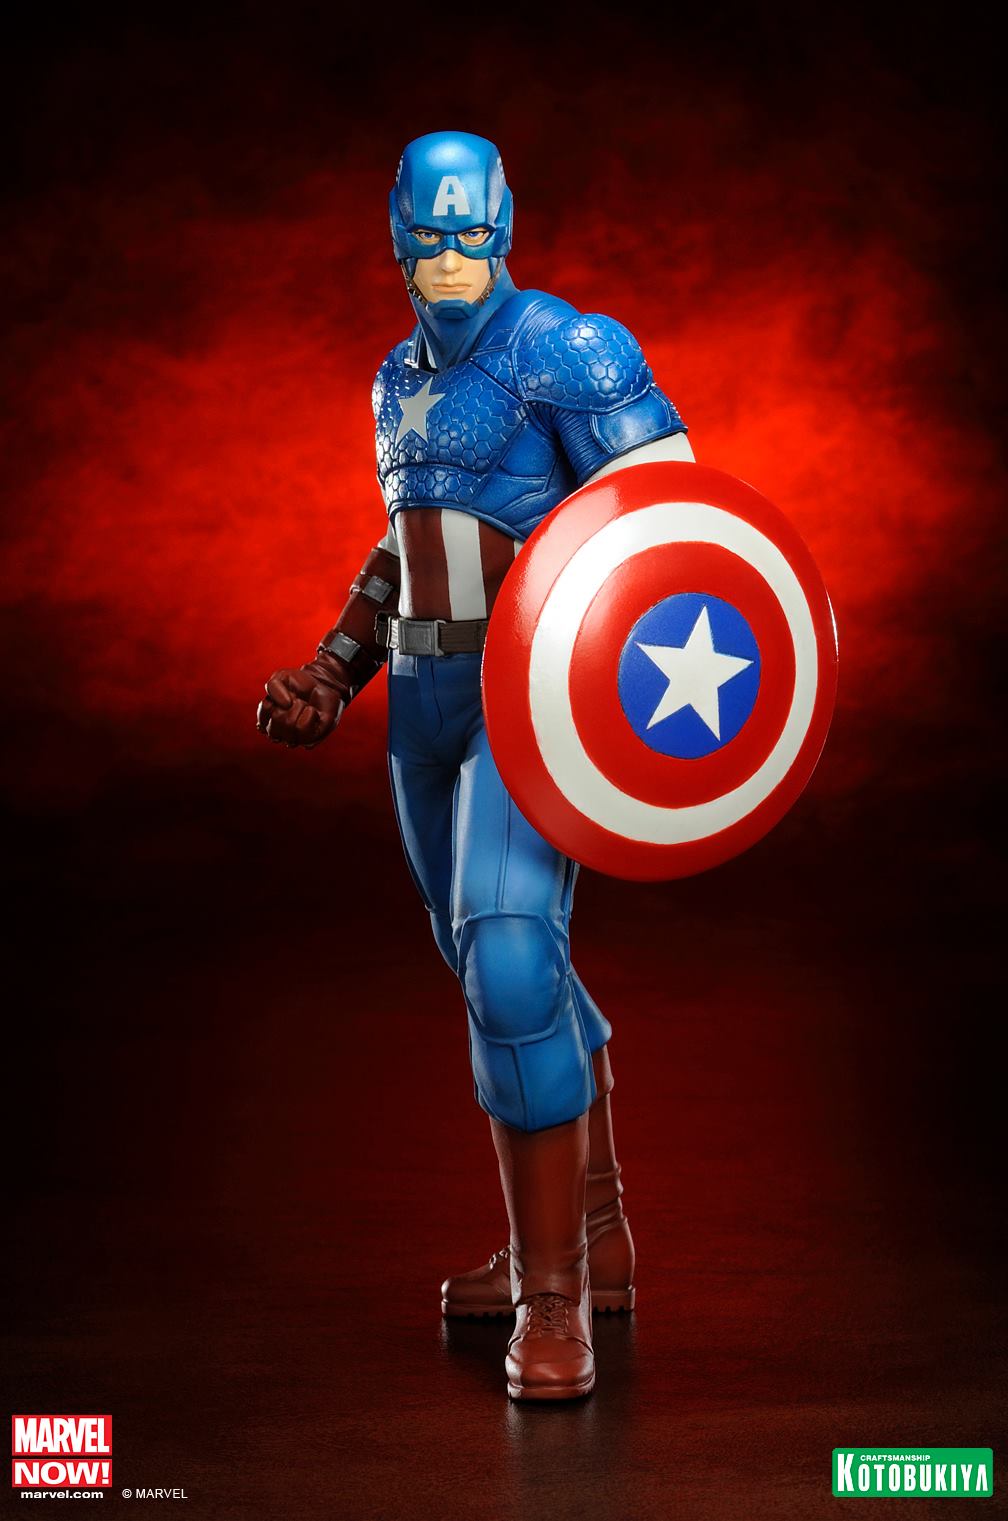 Kotobukiya Marvel Now Captain America ARTFX Statue Page 2